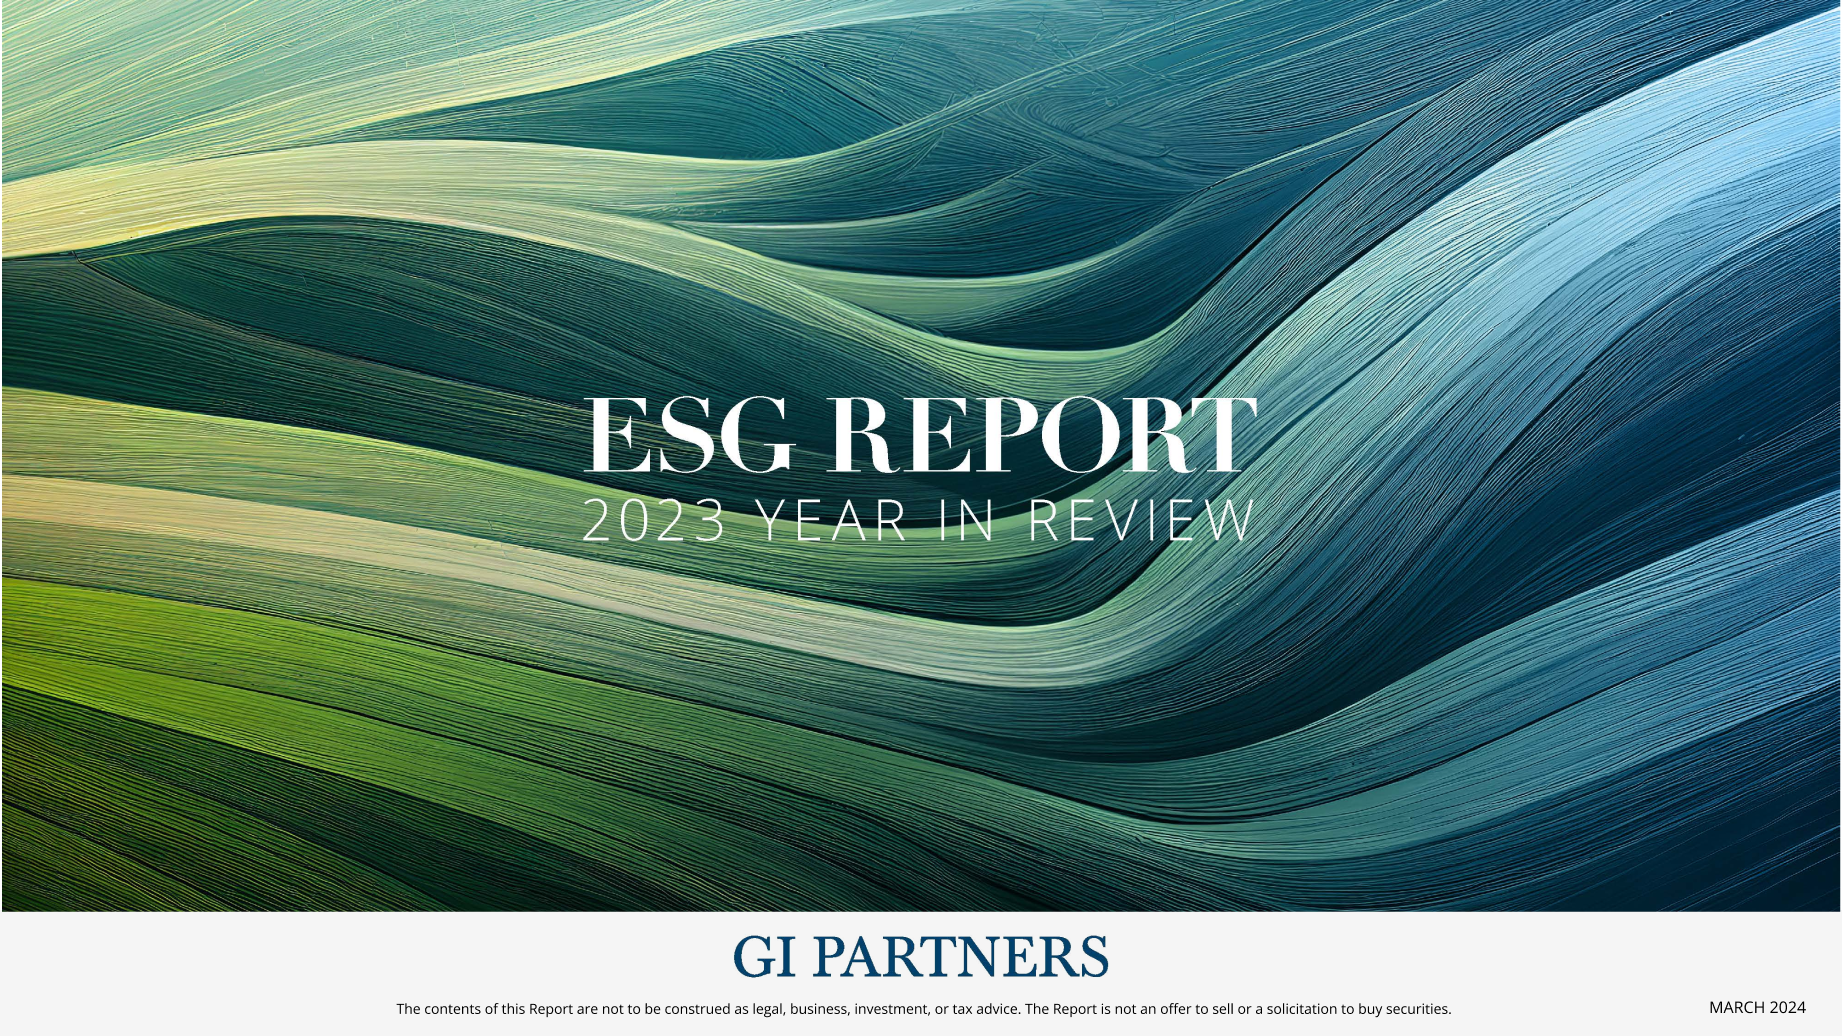 2023 ESG Report cover image